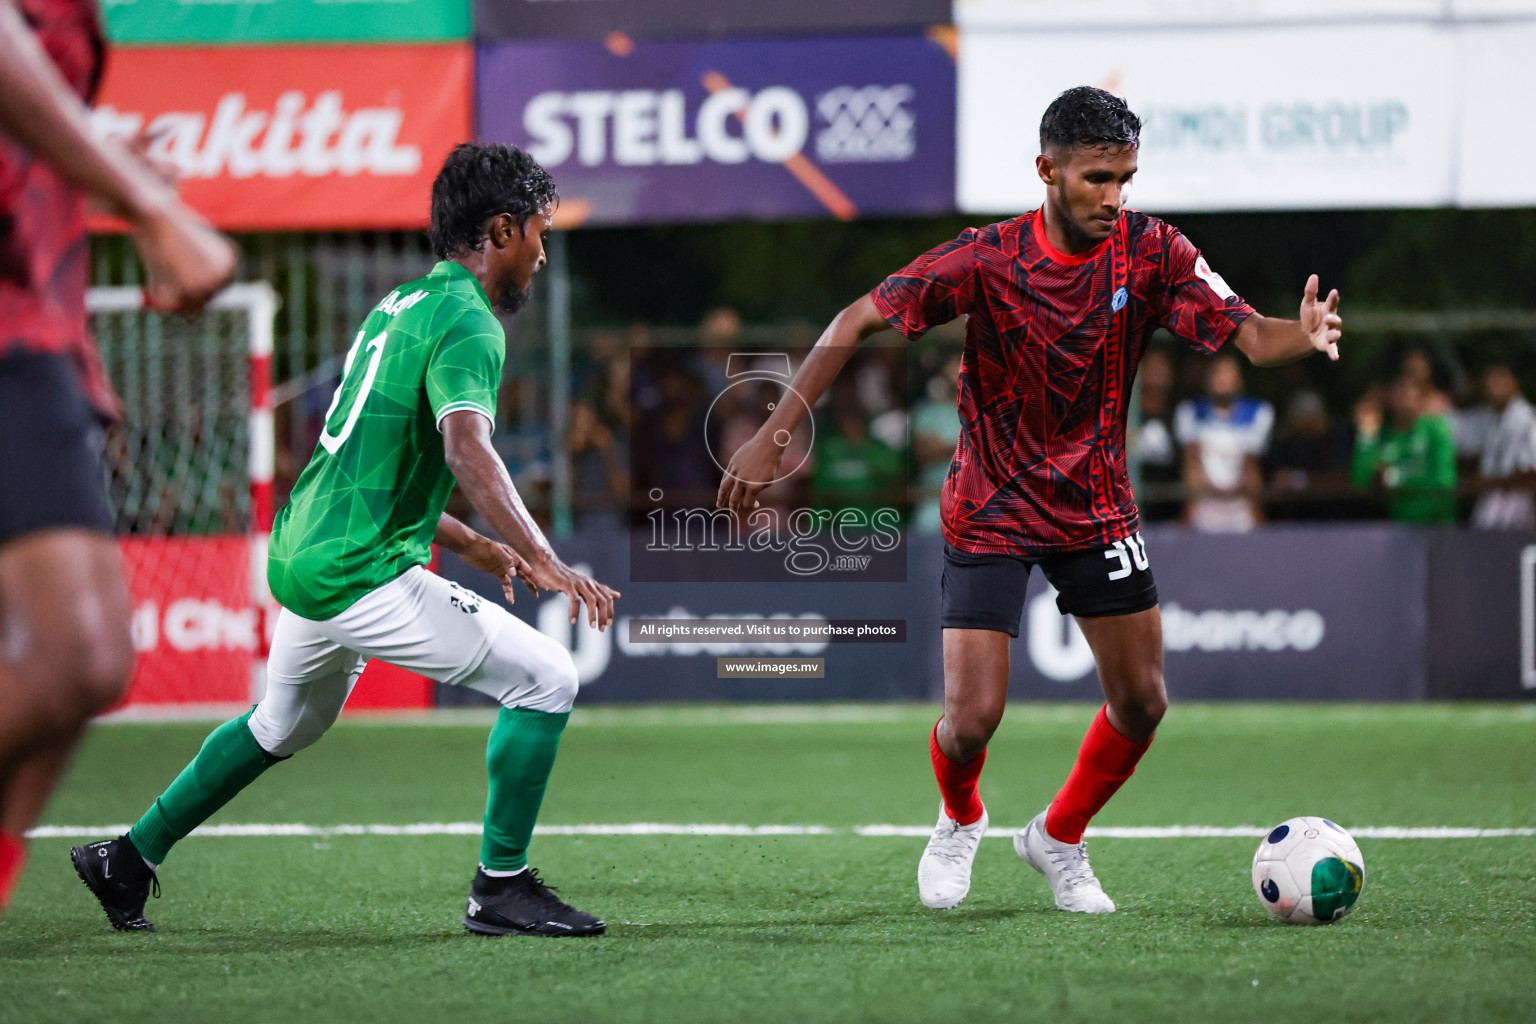 Club URBANCO vs Police Club in Club Maldives Cup 2023 held in Hulhumale, Maldives, on Friday, 28th July 2023 Photos: Nausham Waheed/ images.mv